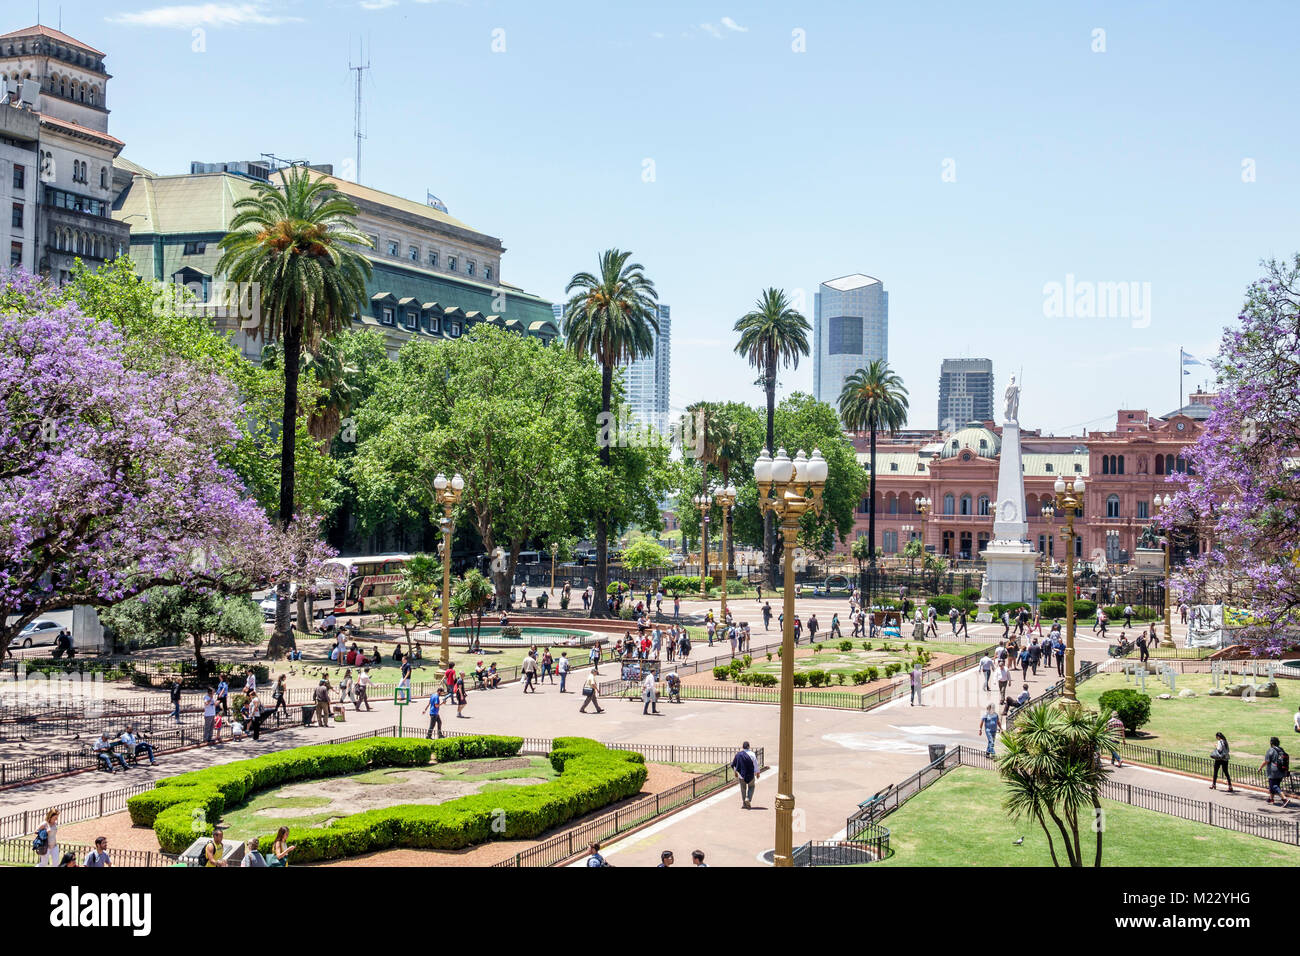 Argentina Buenos Aires Plaza de Mayo central square,view Cabildo Casa Rosada presidential palace park garden Hispanic, Stock Photo